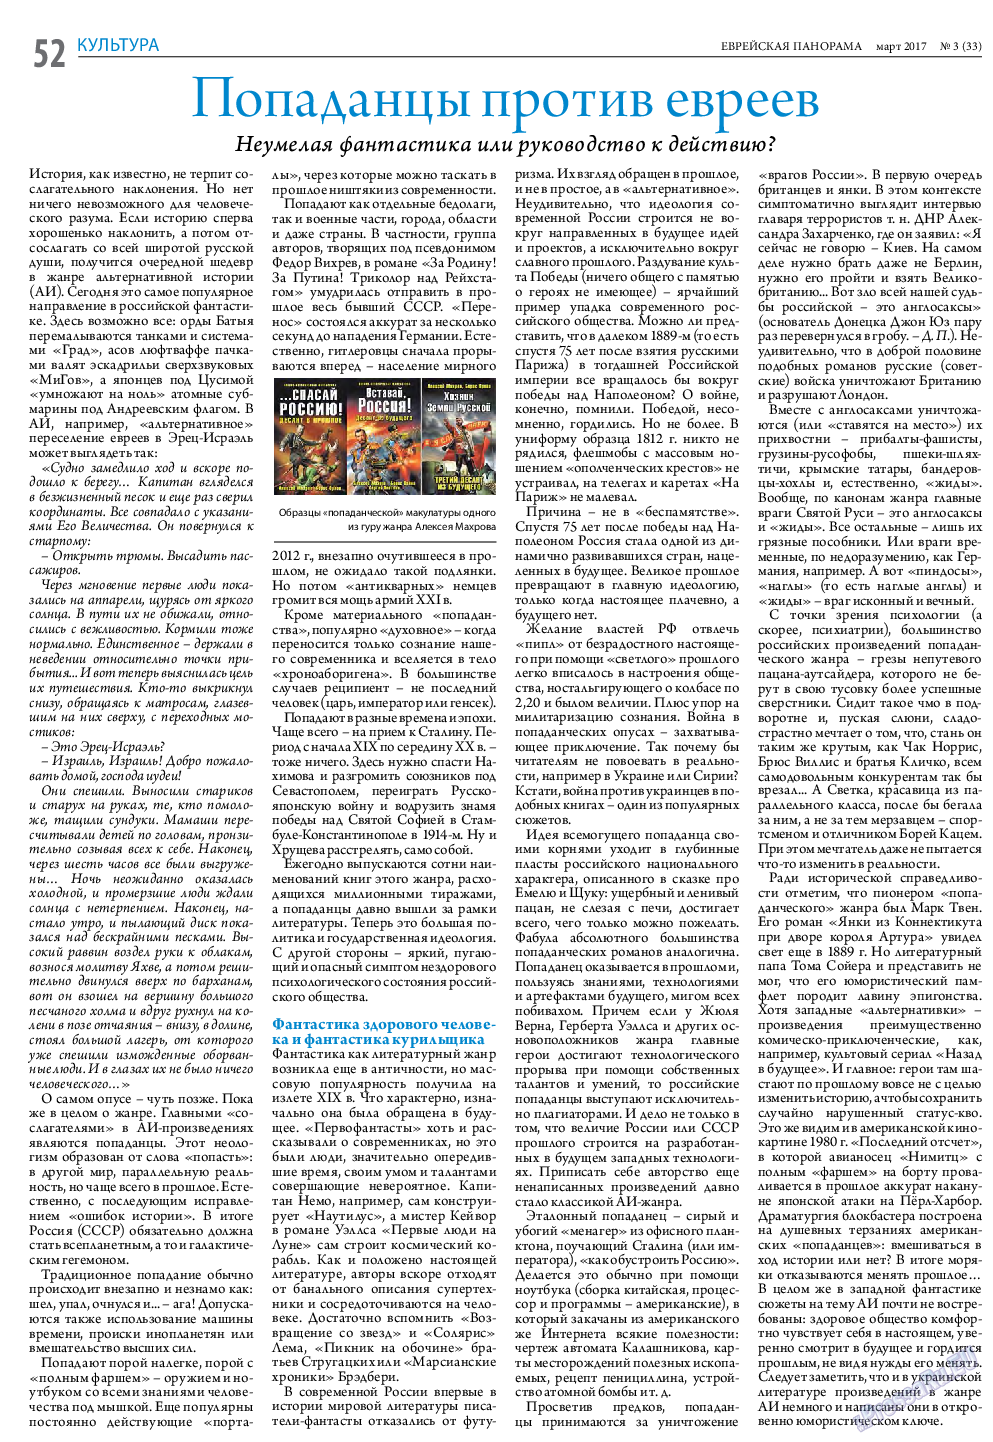 Еврейская панорама, газета. 2017 №3 стр.52